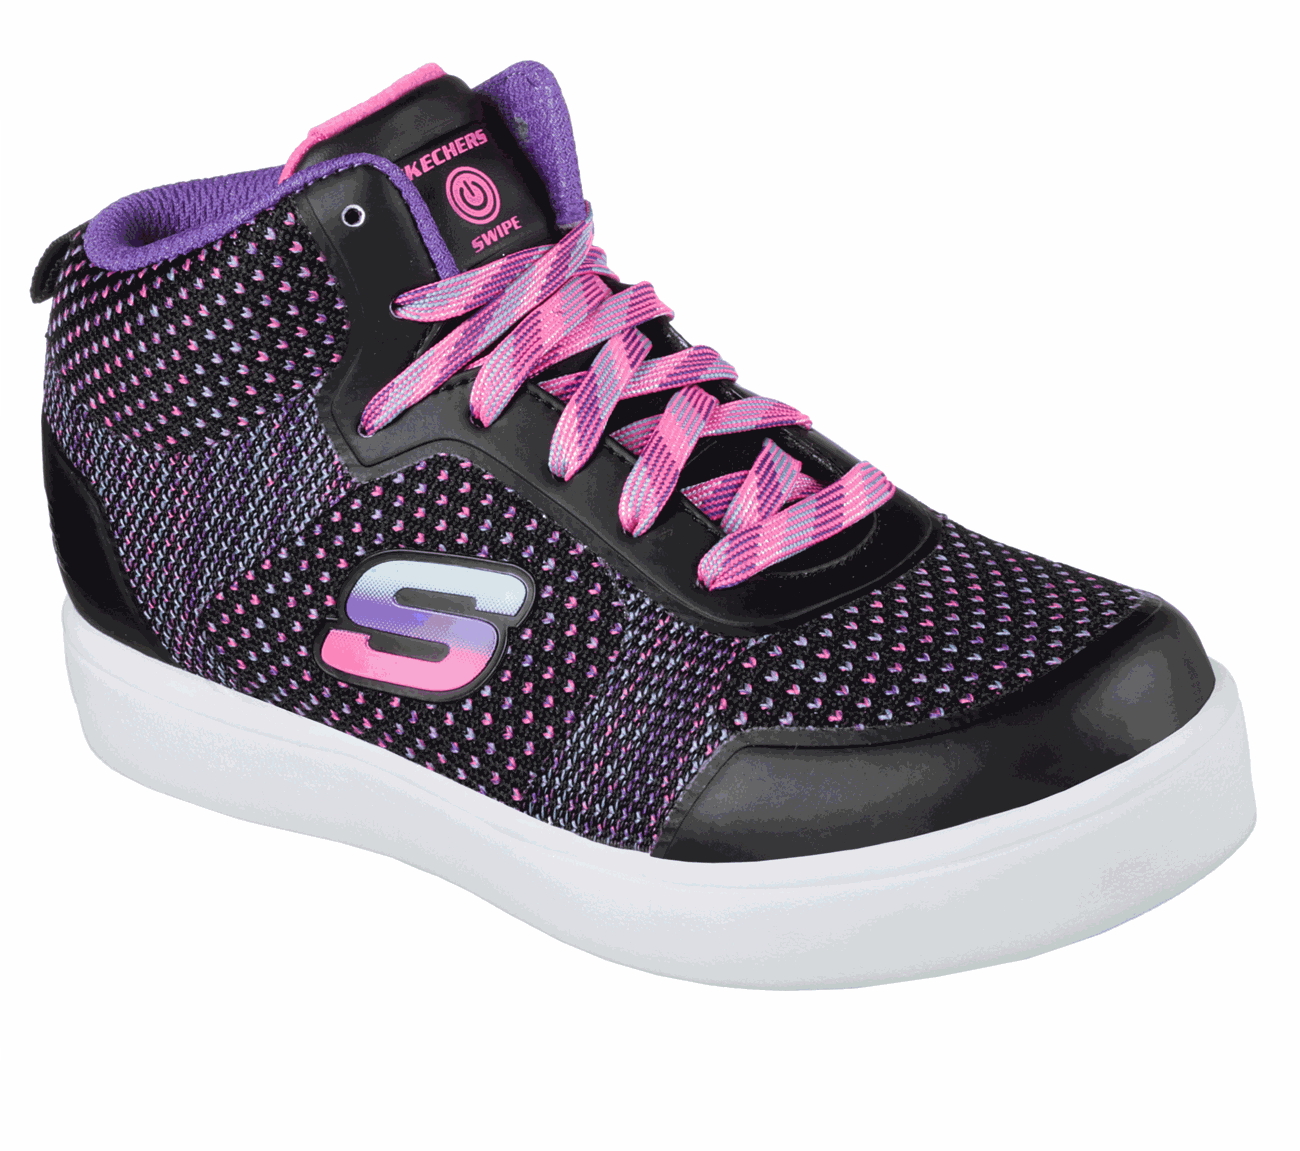 Estrella Seducir alarma Zapatos Skechers Energy Lights Pink Deals - benim.k12.tr 1687850354